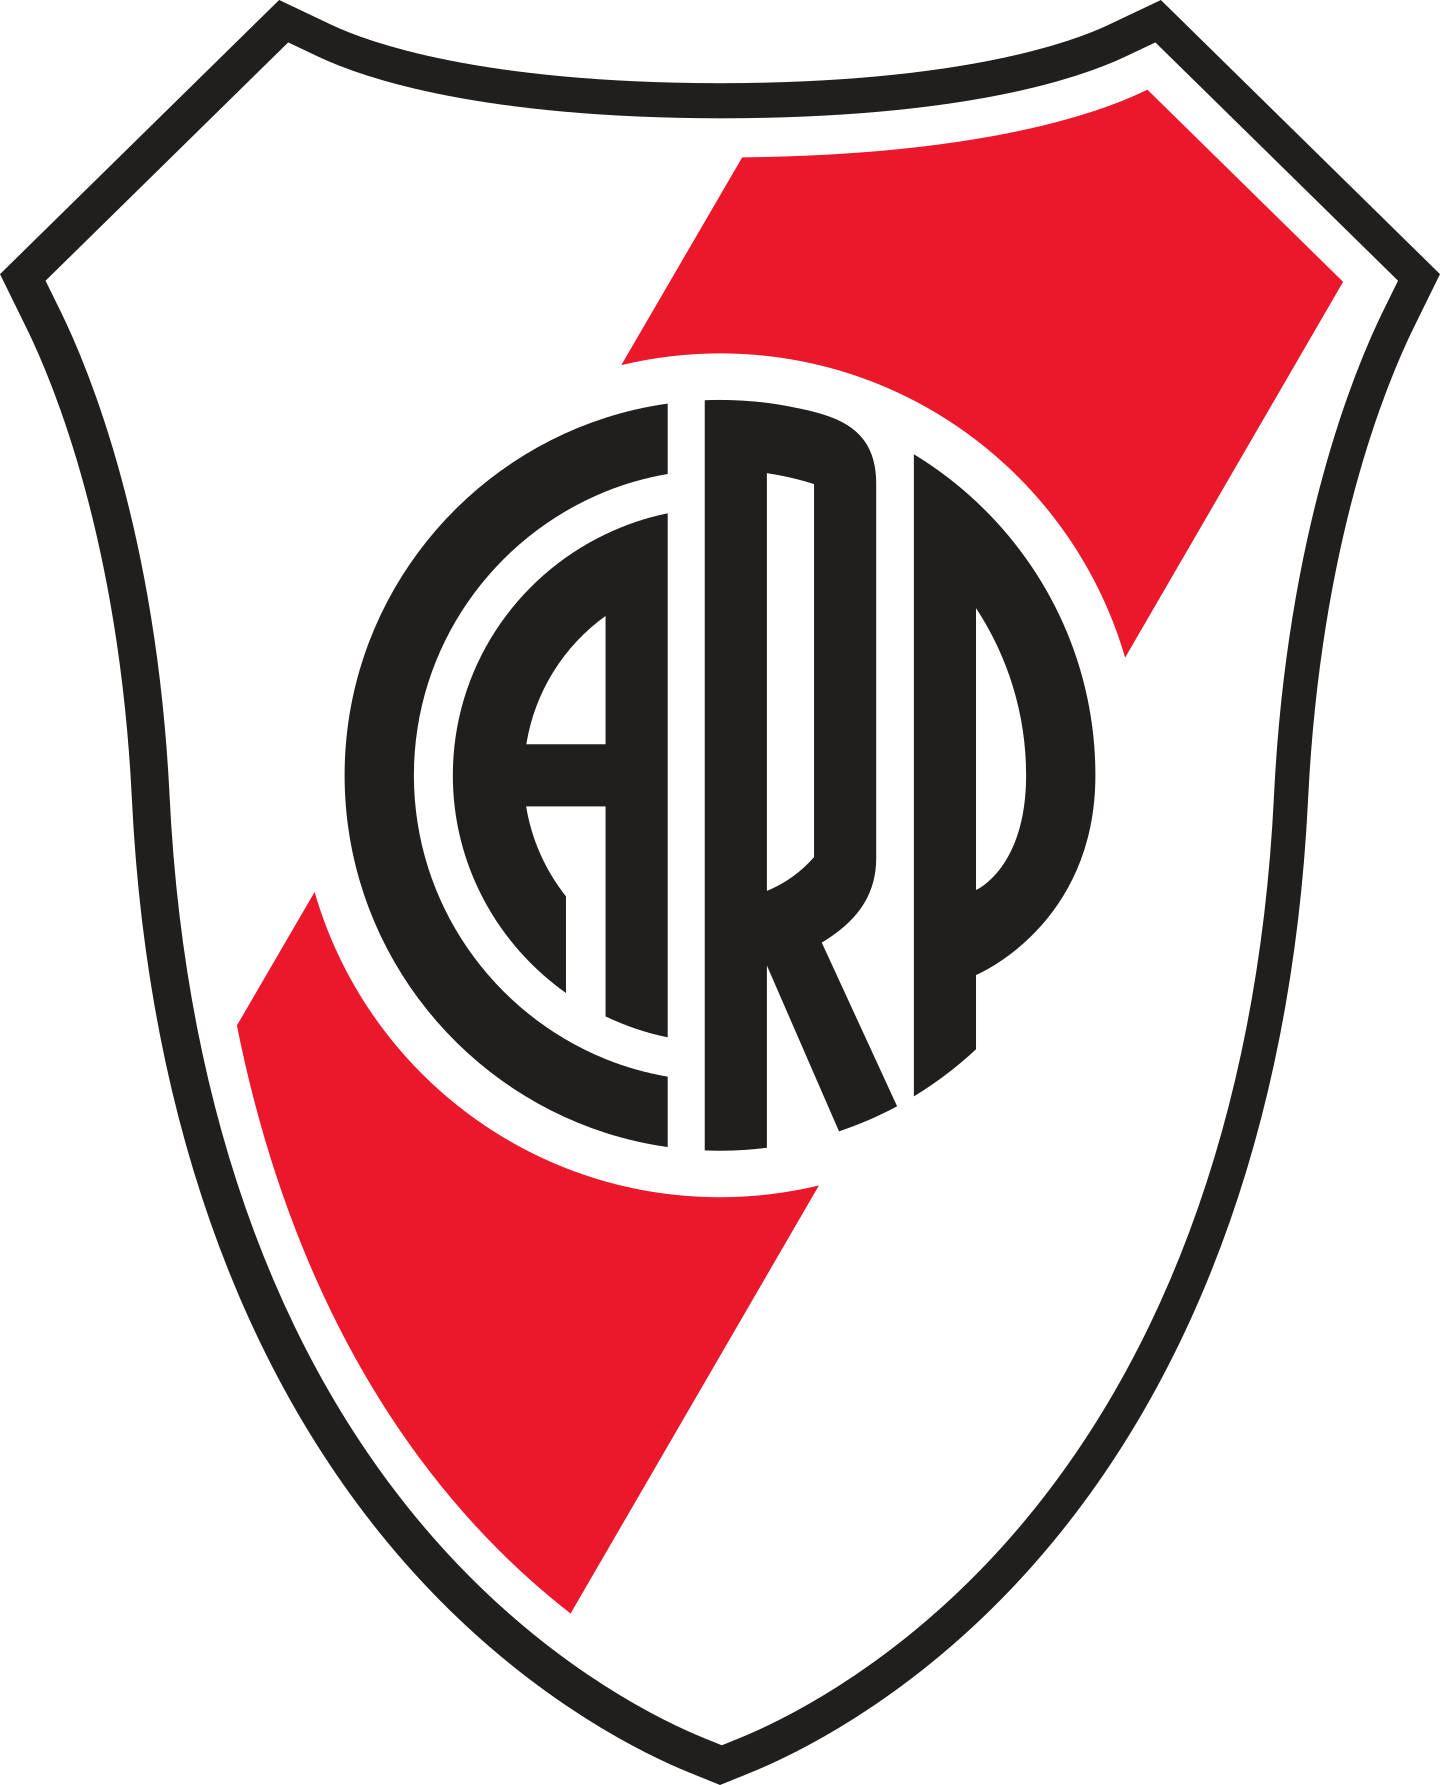 river plate logo 2 2 - River Plate Logo